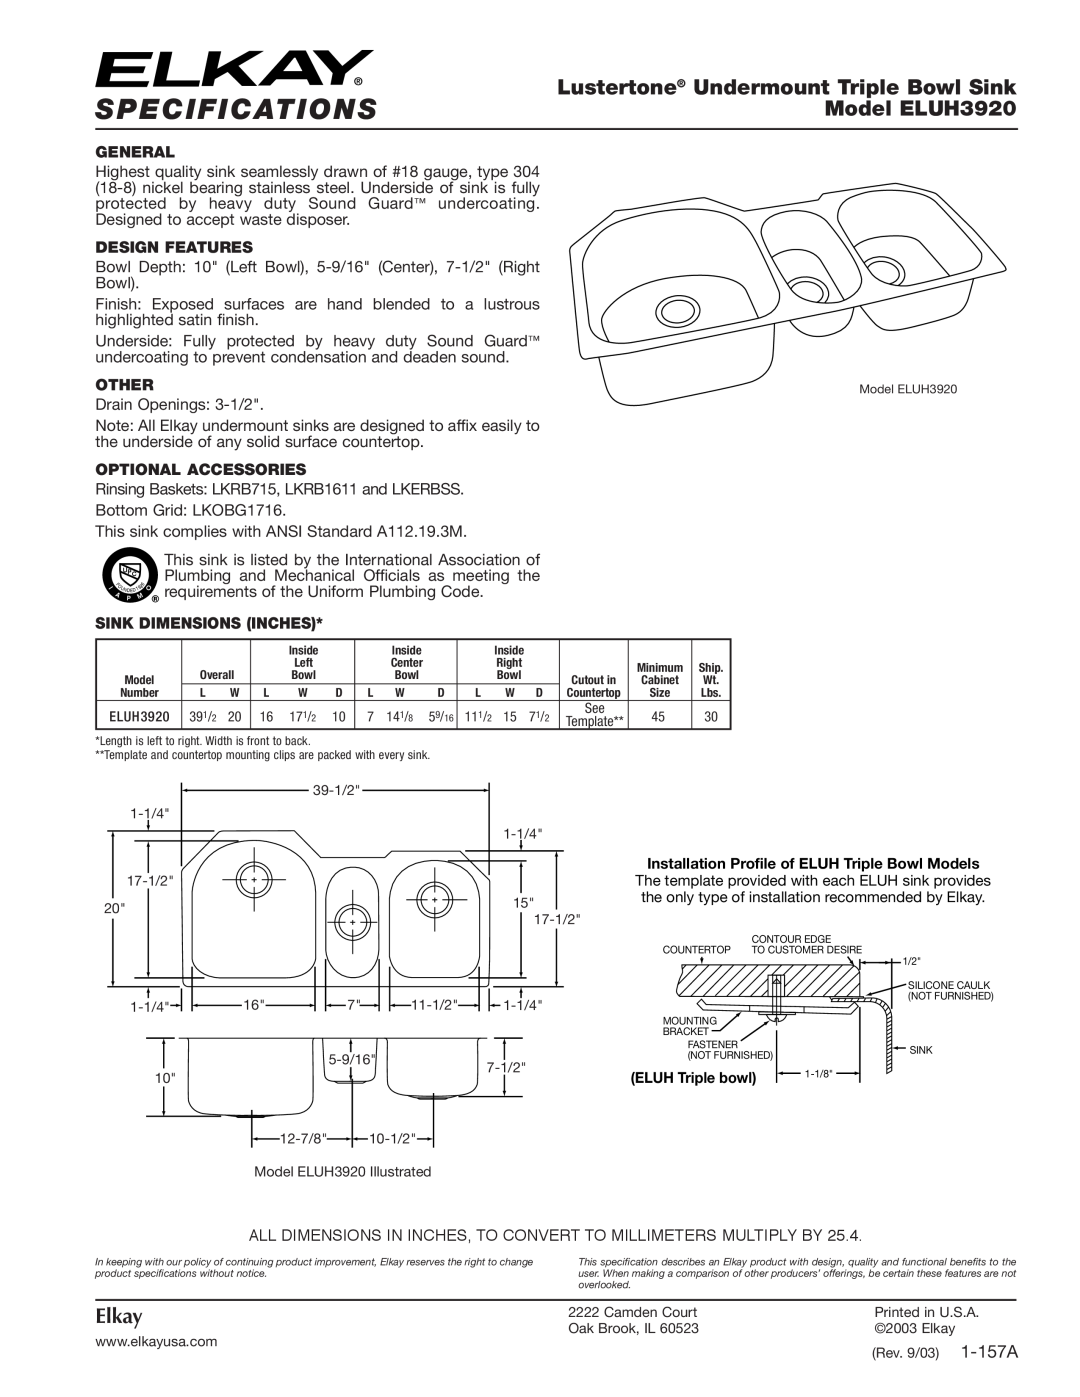 Elkay specifications Specifications, Lustertone Undermount Triple Bowl Sink, Model ELUH3920, Elkay, General, Other 